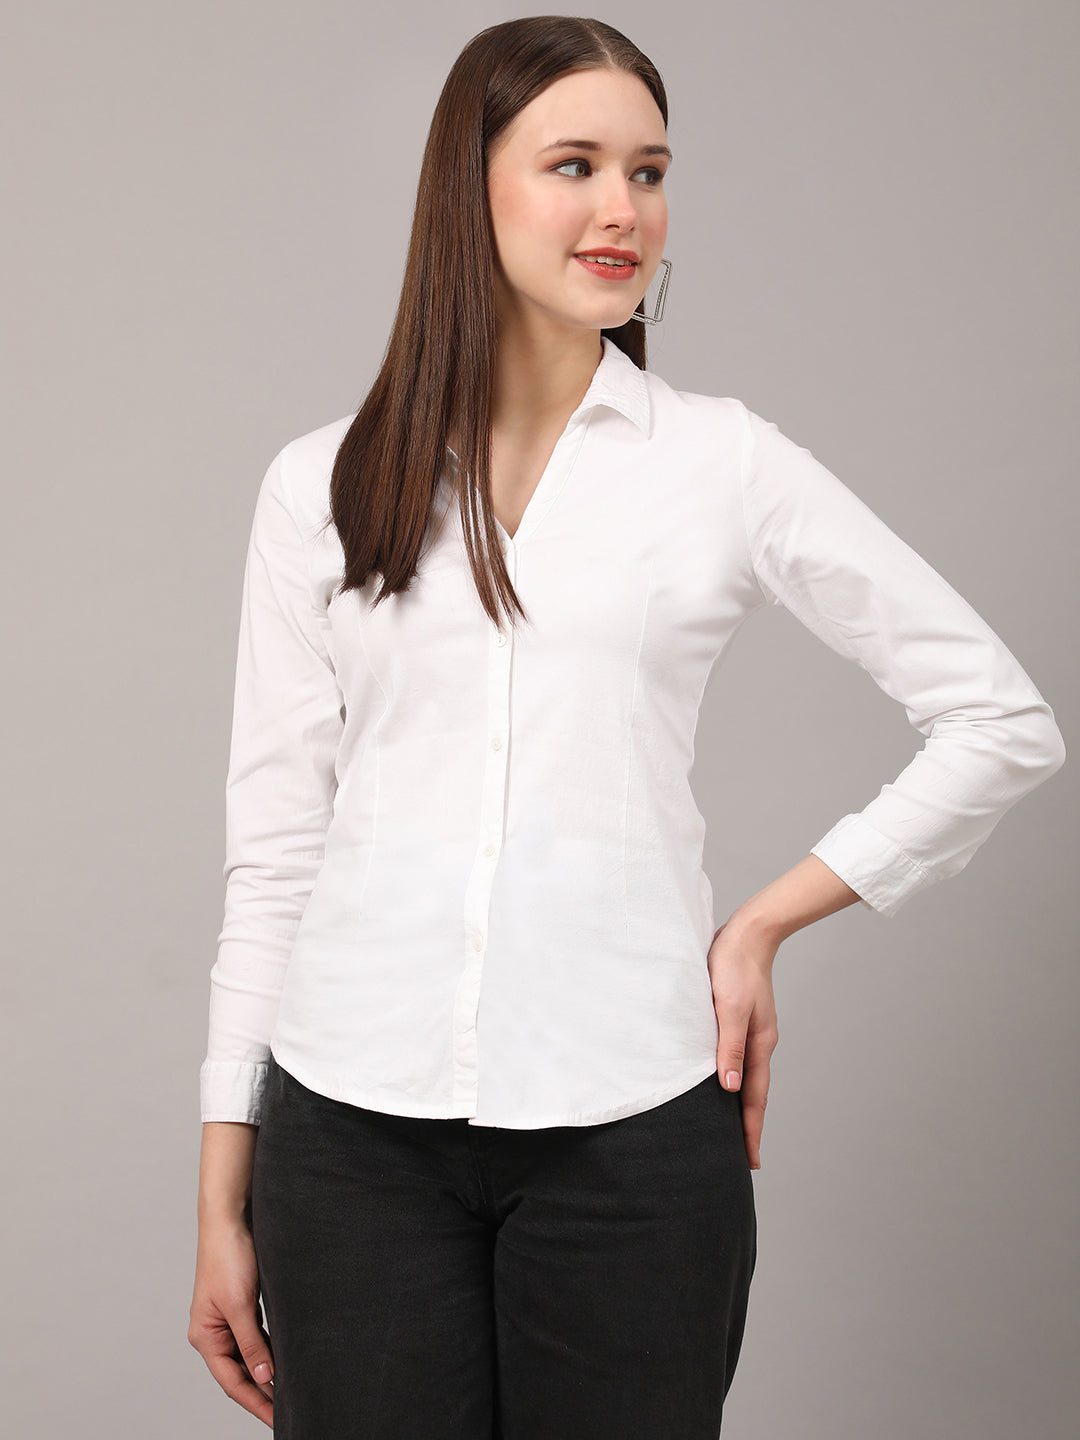 Black Slim Fit Formal Solid Shirt White